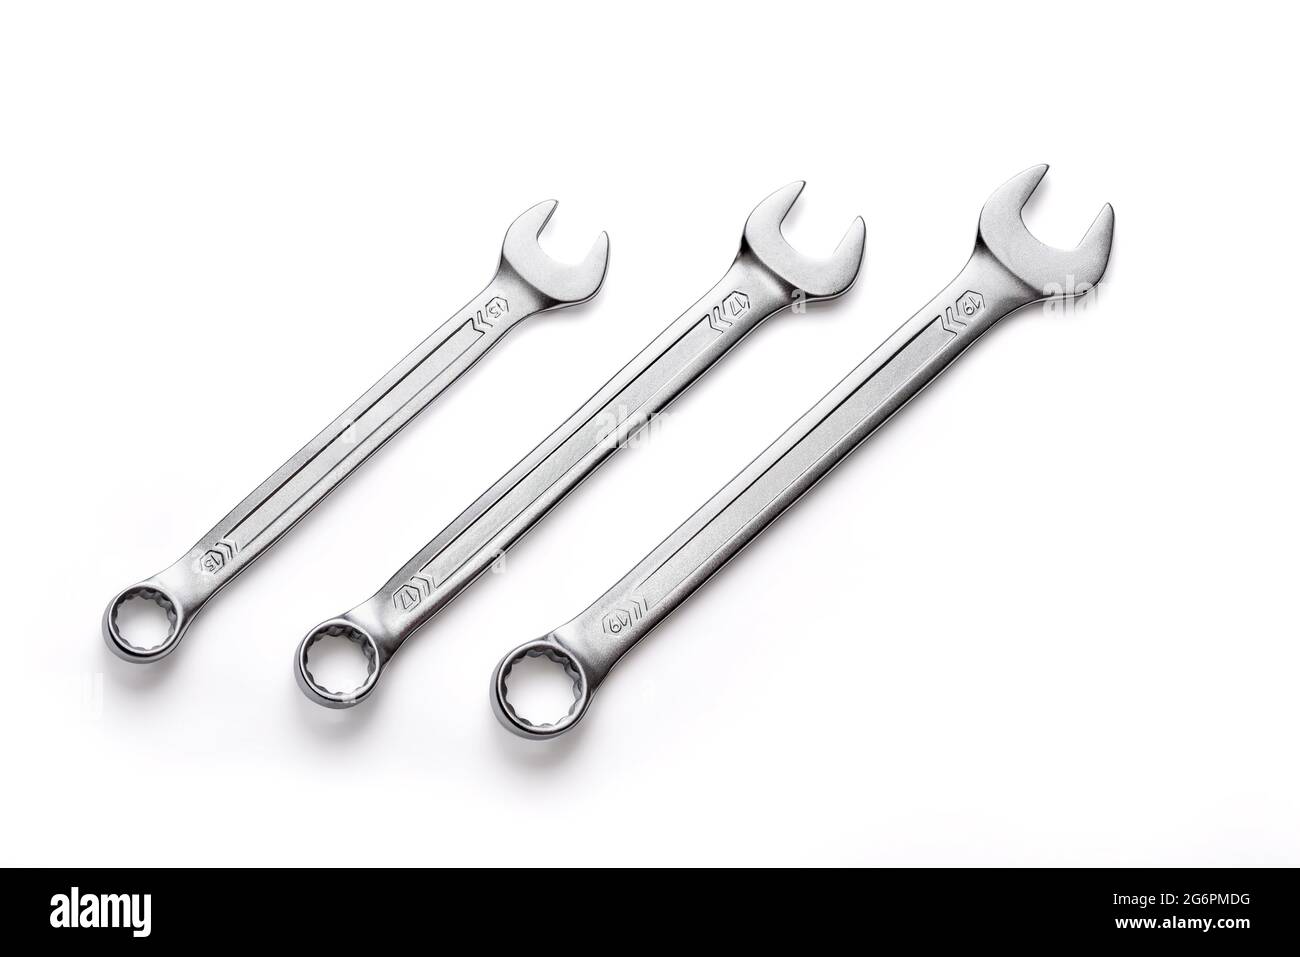 Three chrome vanadium wrenches isolated on white background Stock Photo